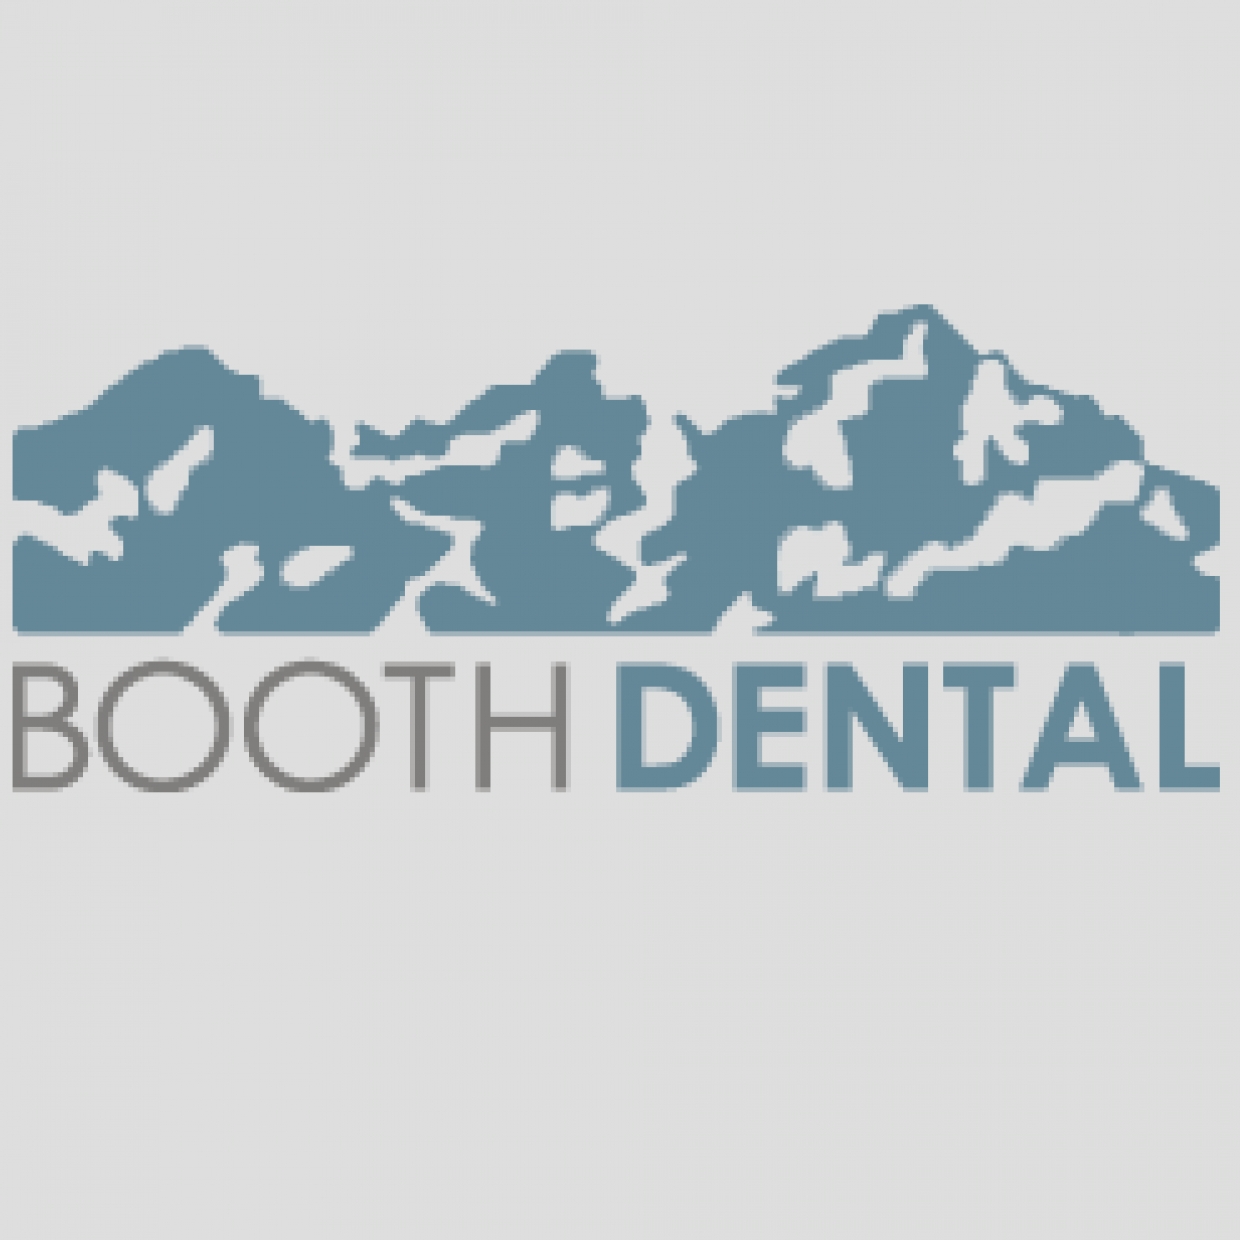 Booth Dental Clinic